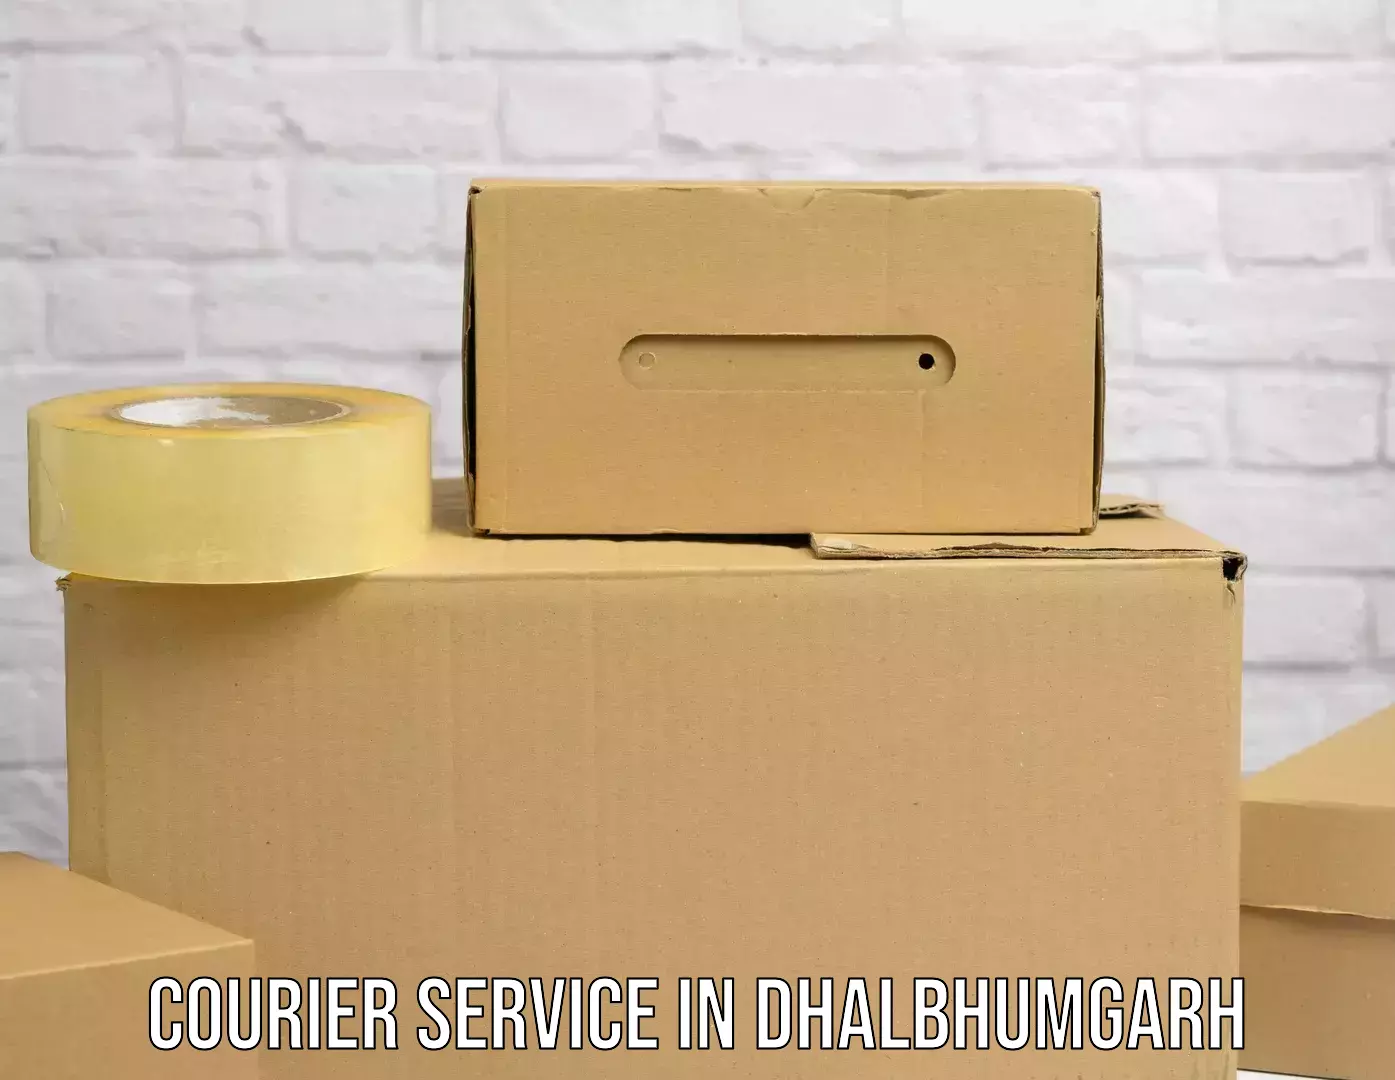 Expedited shipping methods in Dhalbhumgarh